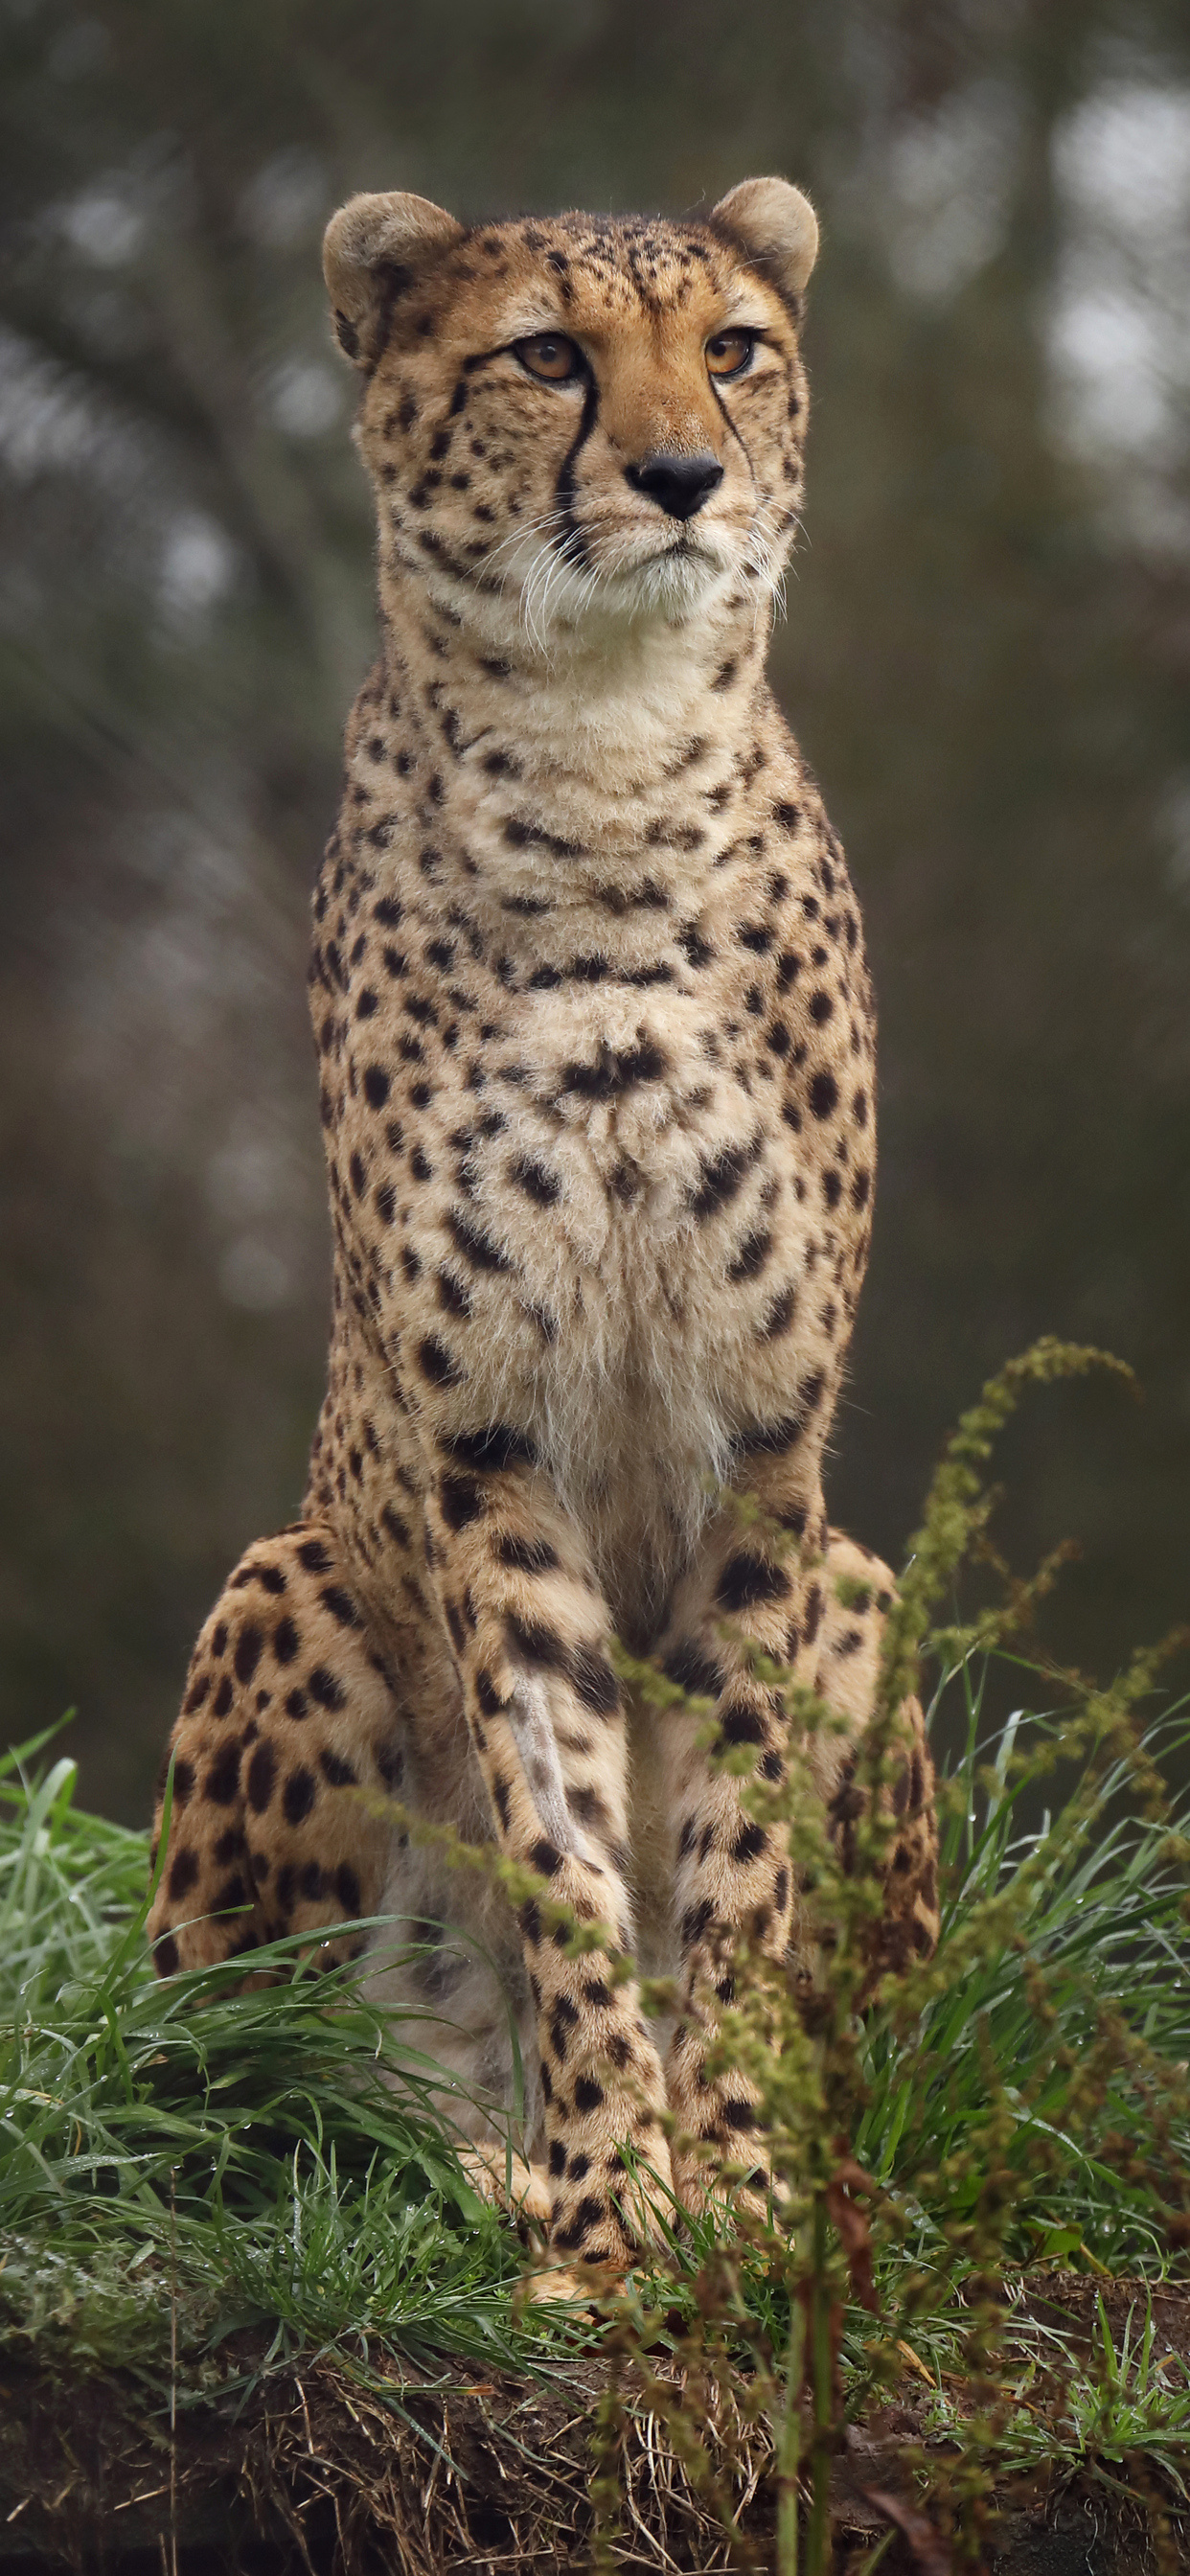 4K cheetah imagery, Wild beauty captured, Striking iPhone XS Max wallpaper, Stunning HD photography, 1250x2690 HD Handy